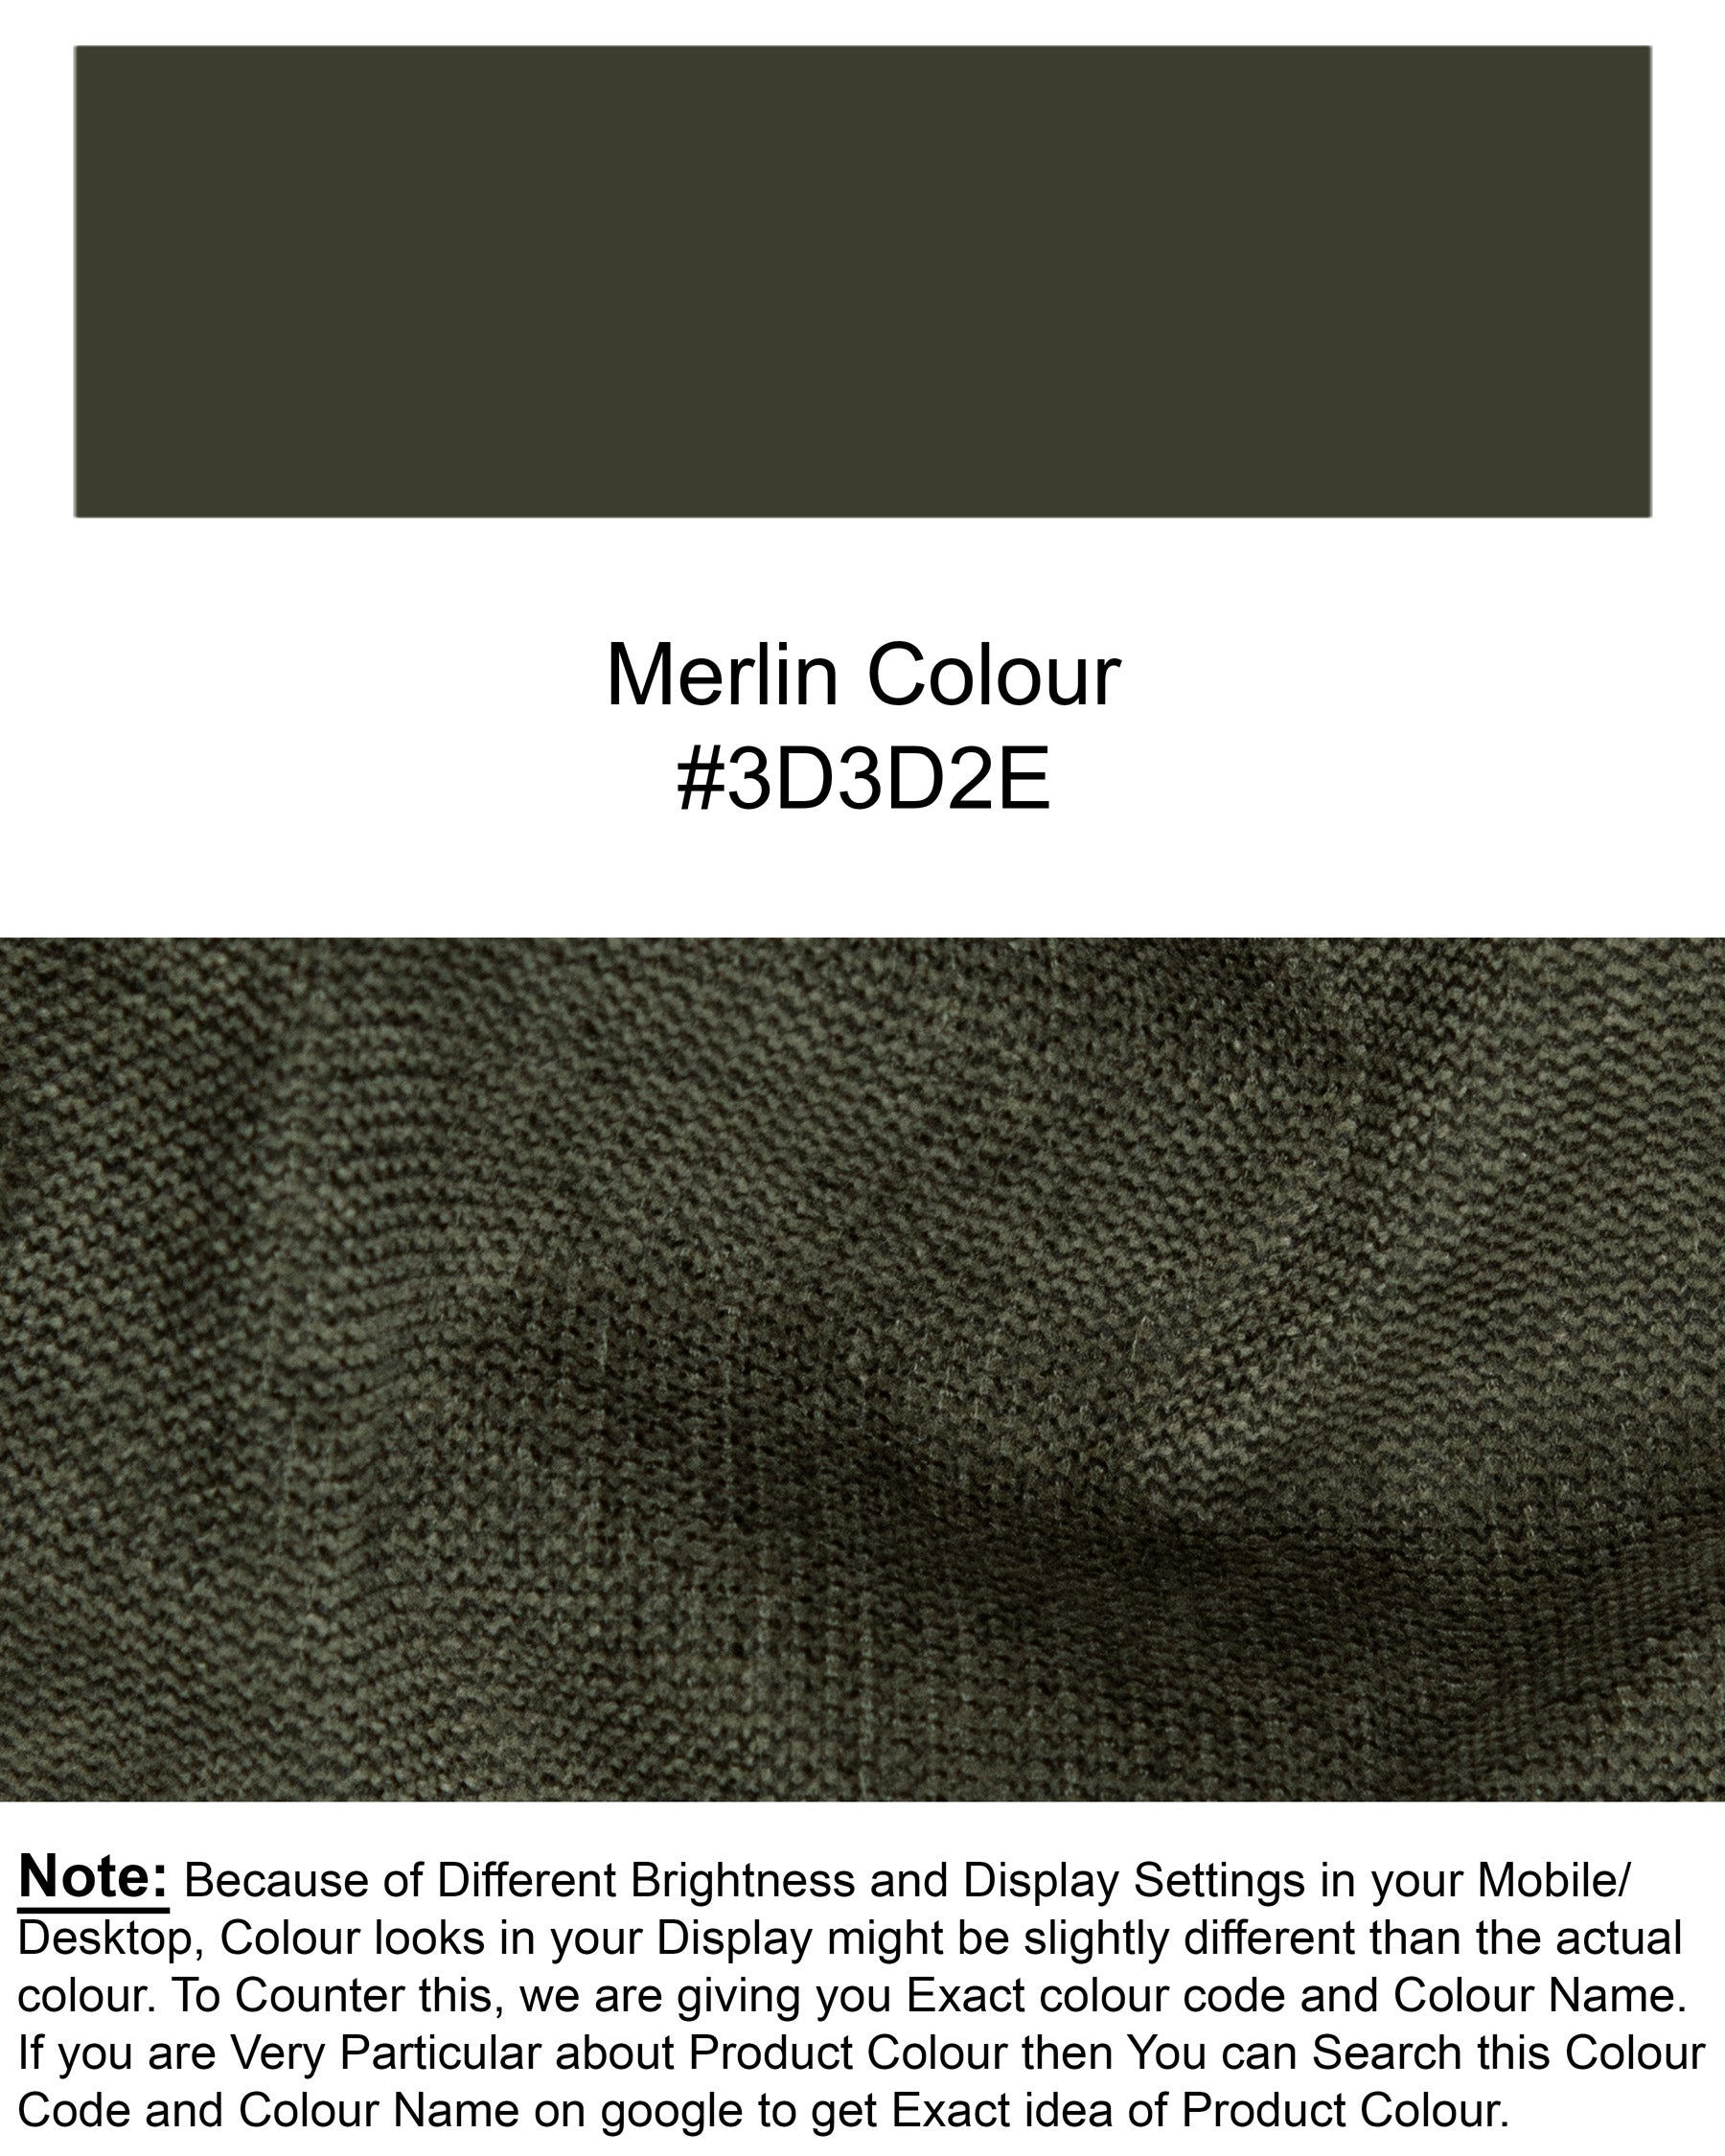 Merlin Green Cross Buttoned Bandhgala/Mandarin Corduroy Premium Cotton Blazer BL1299-CBG2-36, BL1299-CBG2-38, BL1299-CBG2-40, BL1299-CBG2-42, BL1299-CBG2-44, BL1299-CBG2-46, BL1299-CBG2-48, BL1299-CBG2-50, BL1299-CBG2-52, BL1299-CBG2-54, BL1299-CBG2-56, BL1299-CBG2-58, BL1299-CBG2-60